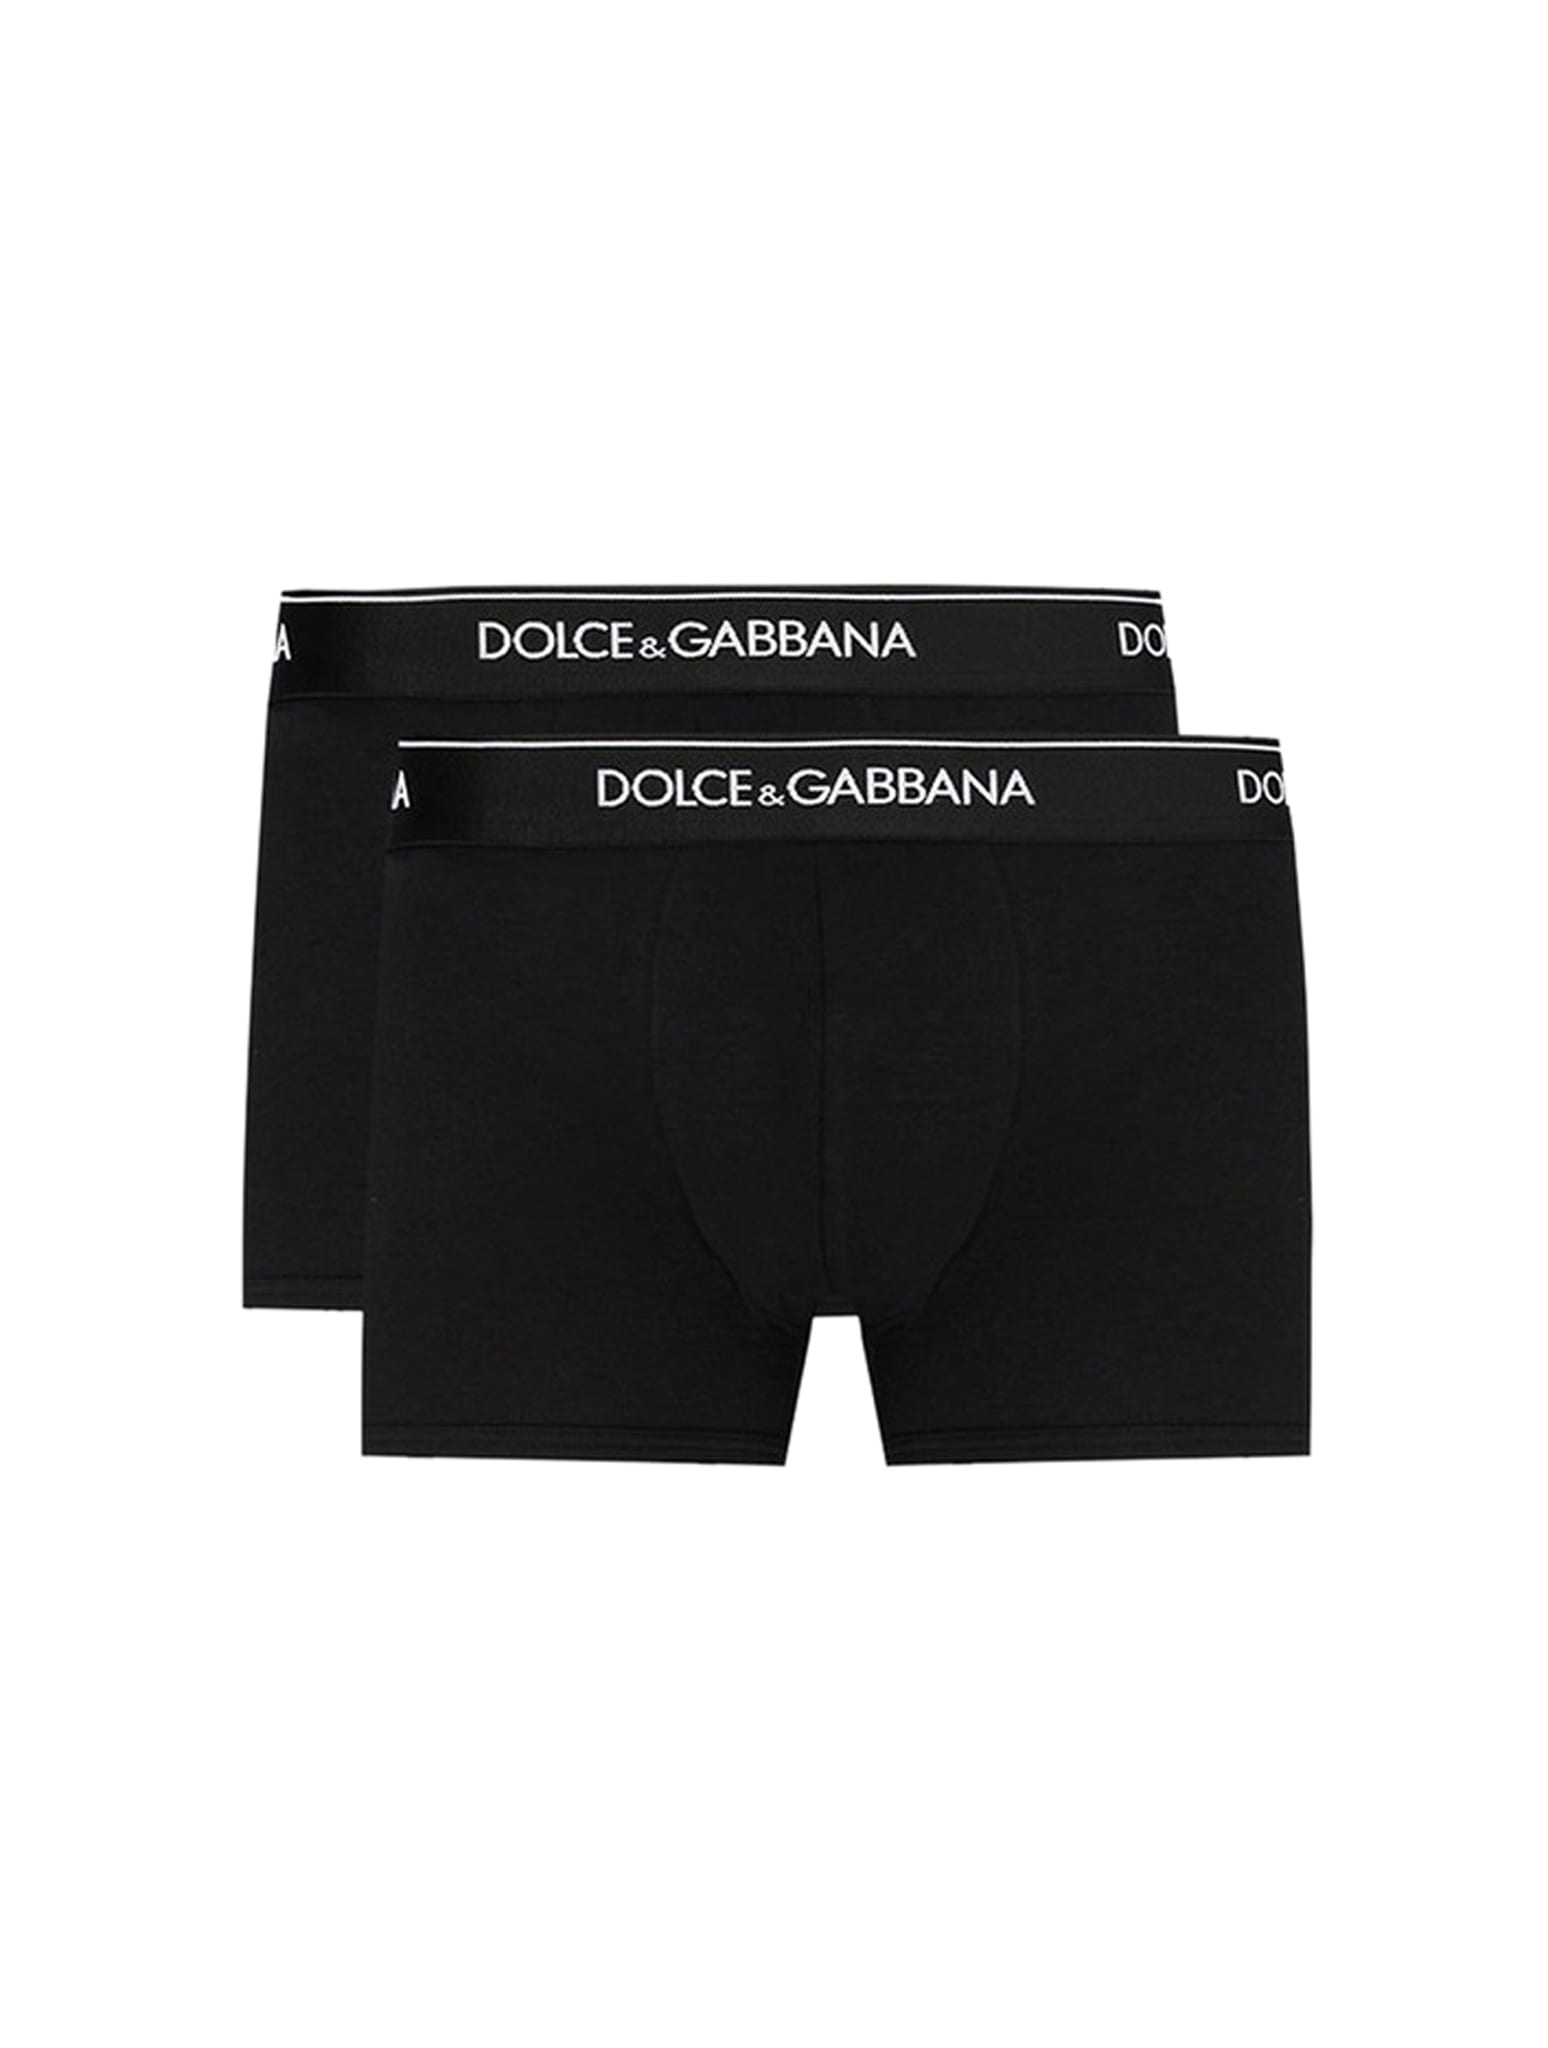 DOLCE & GABBANA - Boxer Shorts + Pochette Dolce & Gabbana